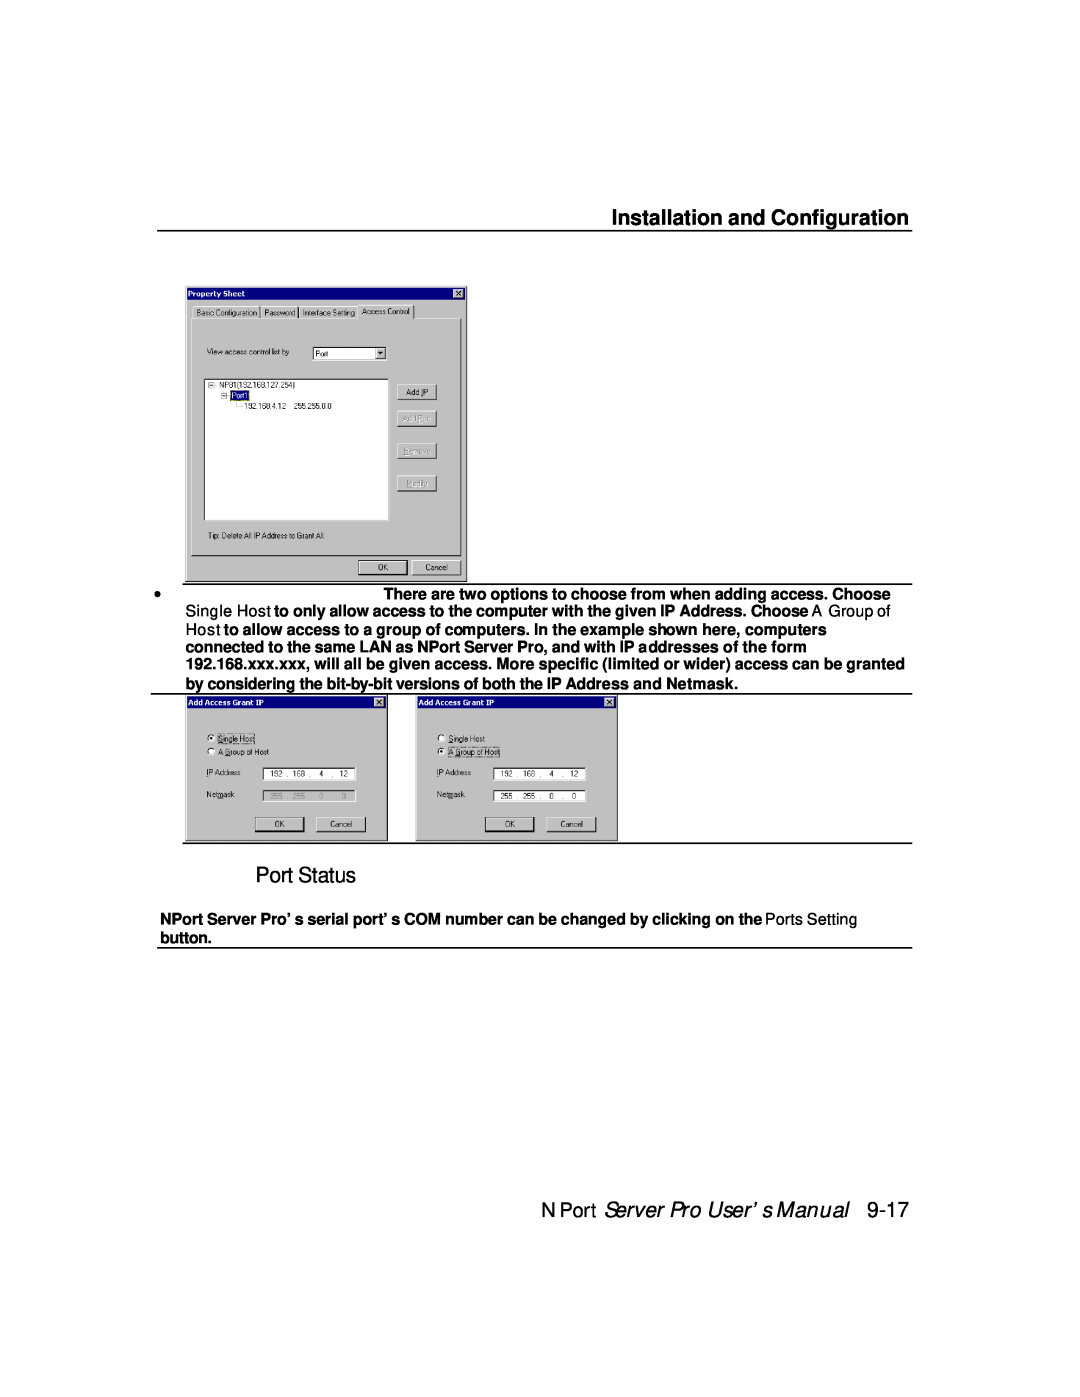 Moxa Technologies DE-308, DE-303 manual Installation and Configuration, Port Status, NPort Server Pro User’s Manual 